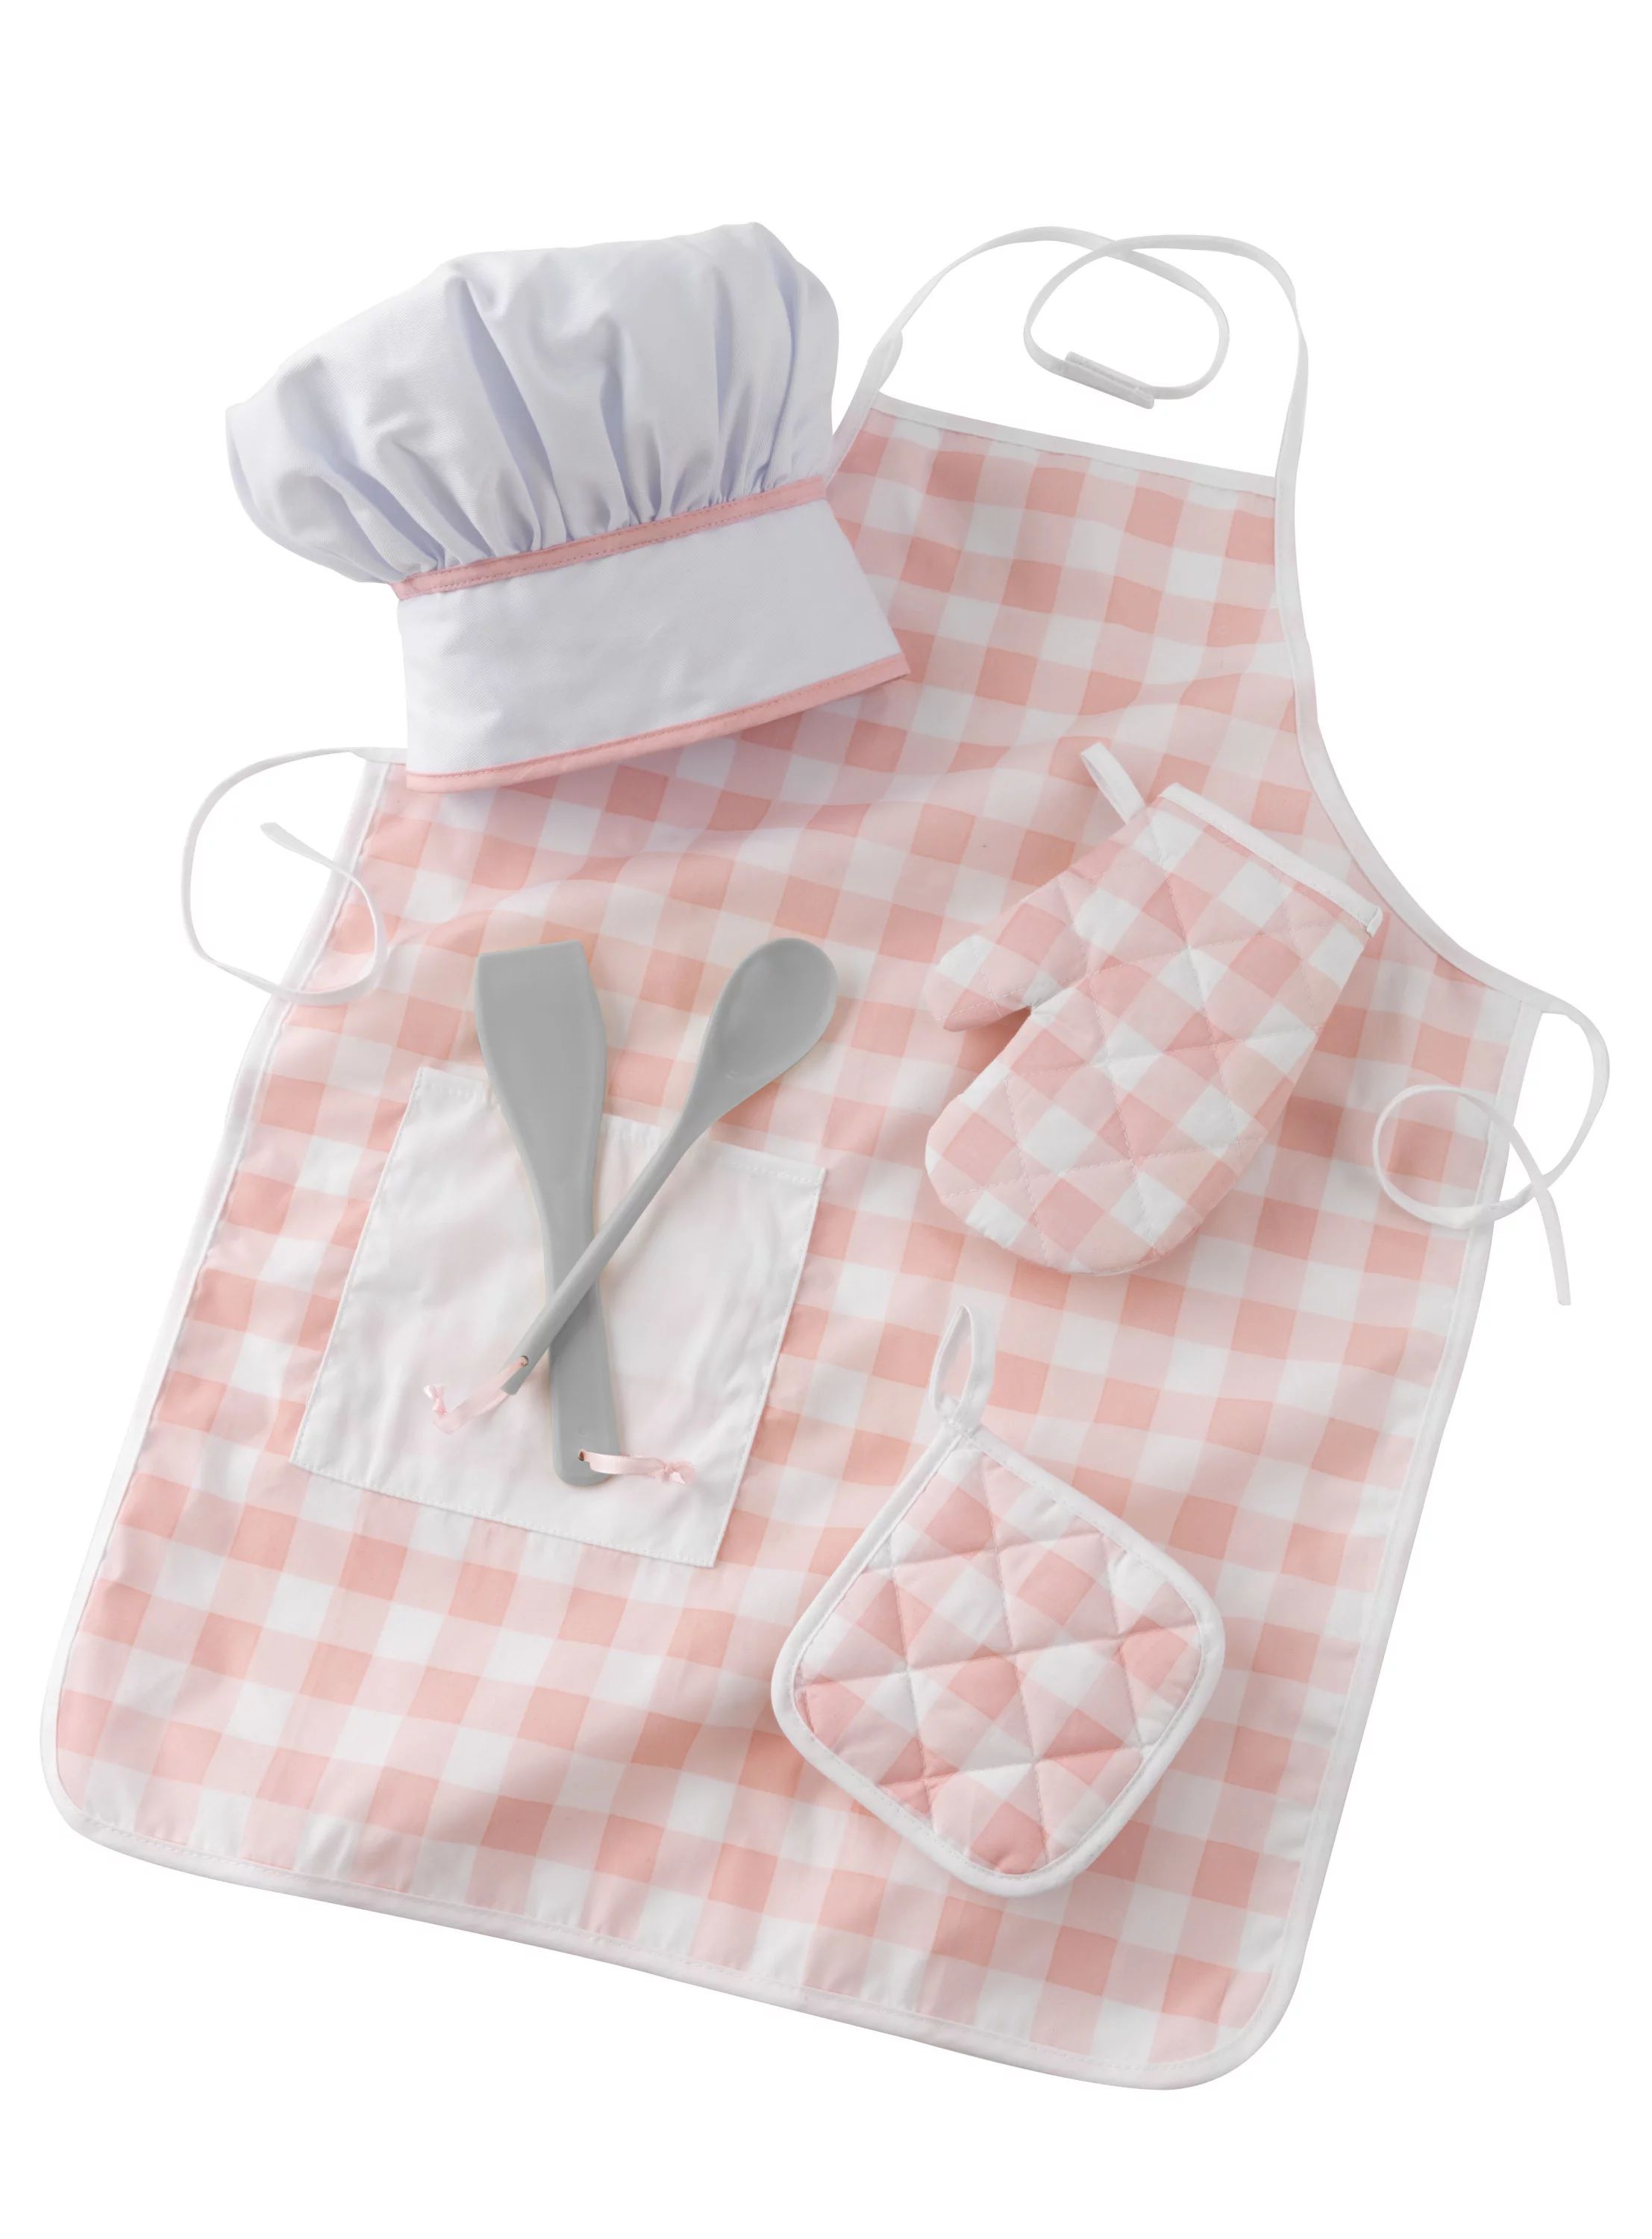 KidKraft Tasty Treats Chef Apron, Hat and Accessory Set for Kids - Pink | Walmart (US)